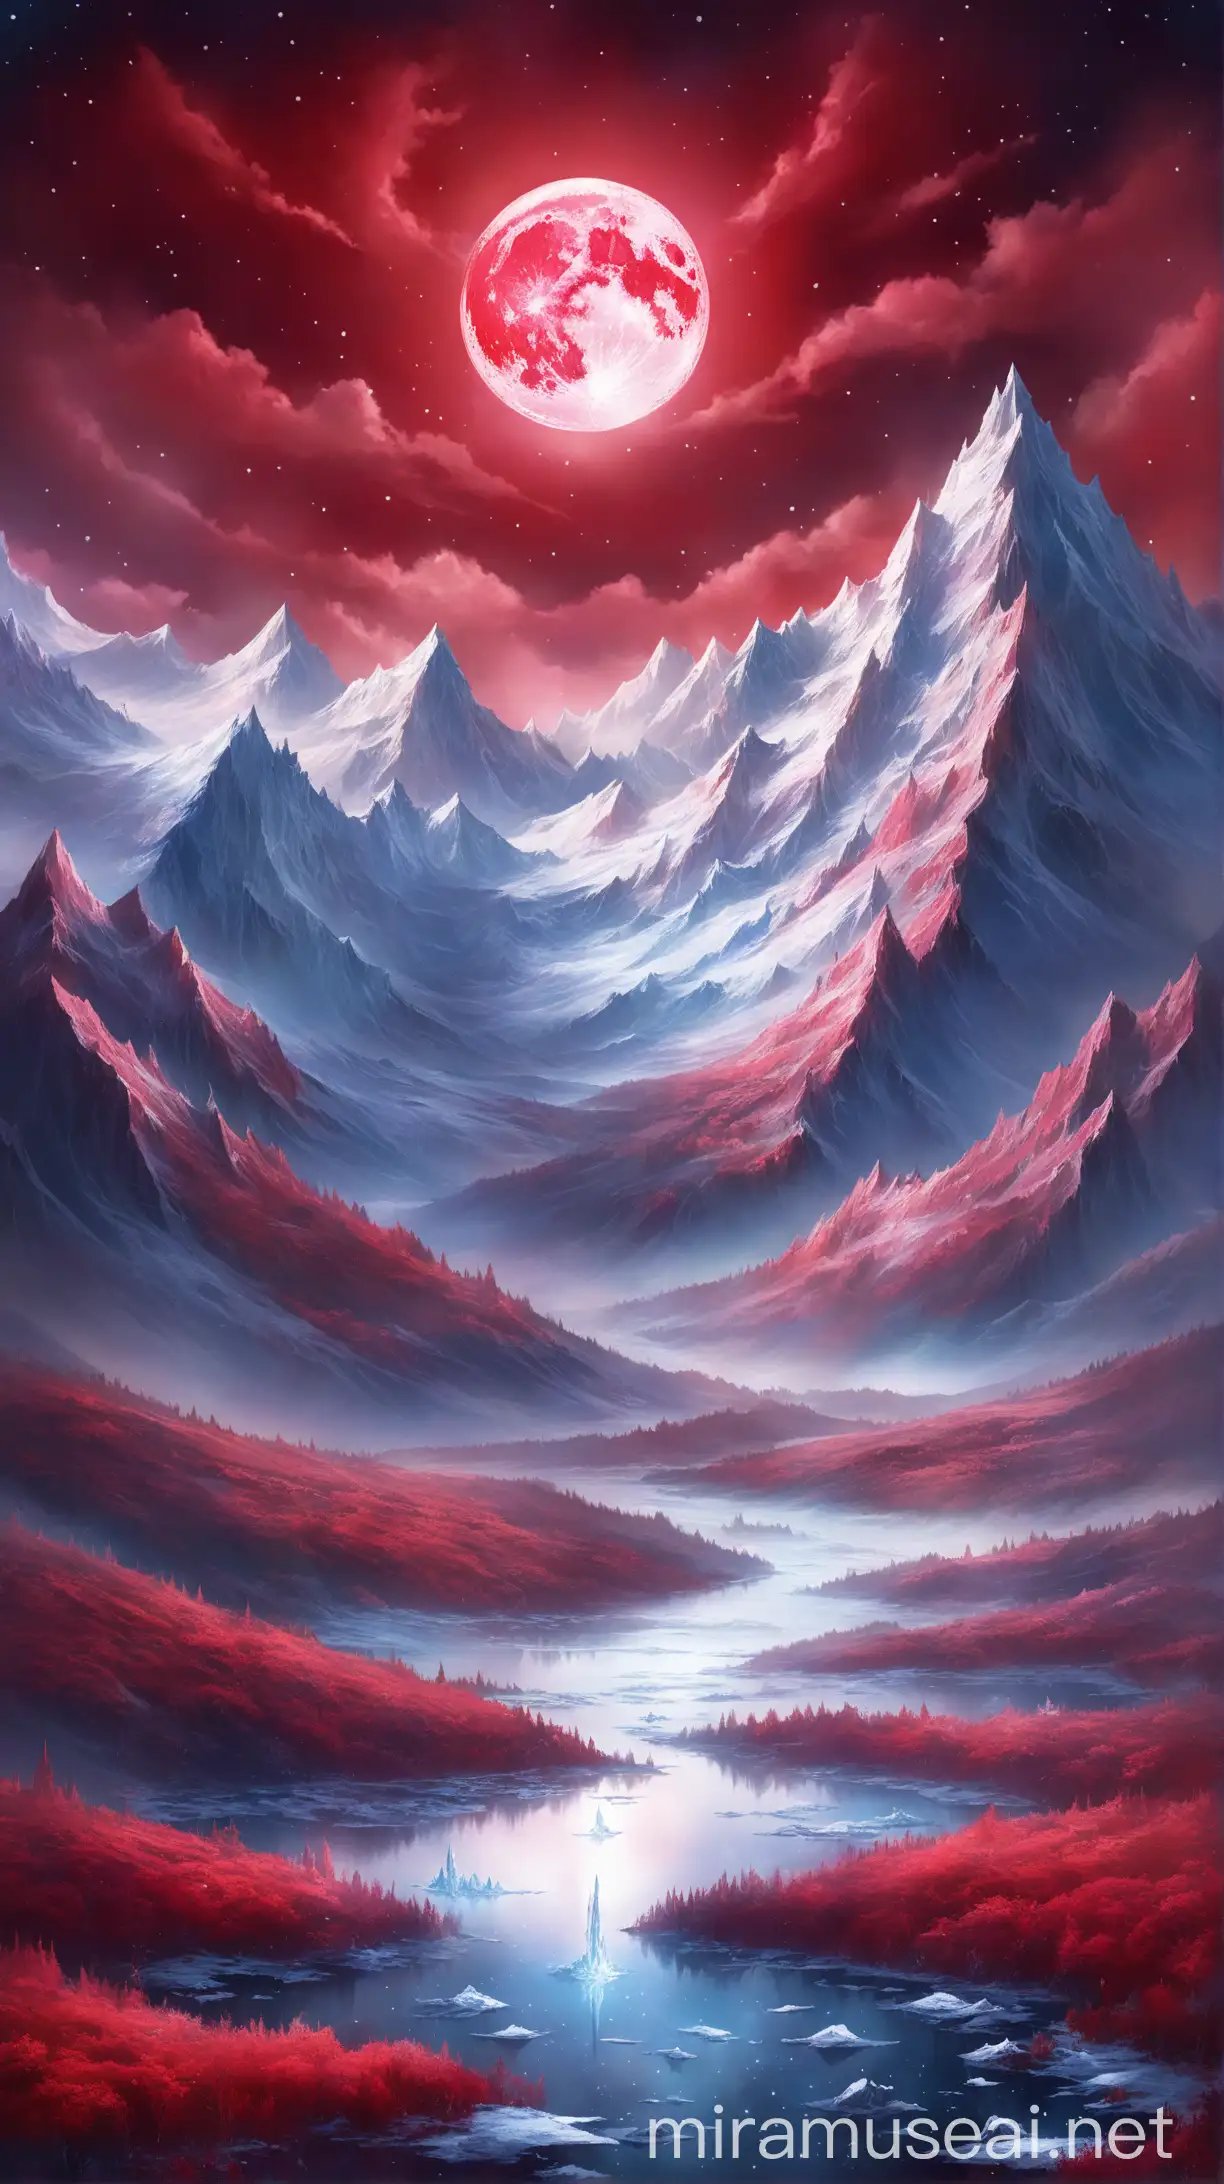 Majestic Crimson Mountains Under Enchanting Moonlight